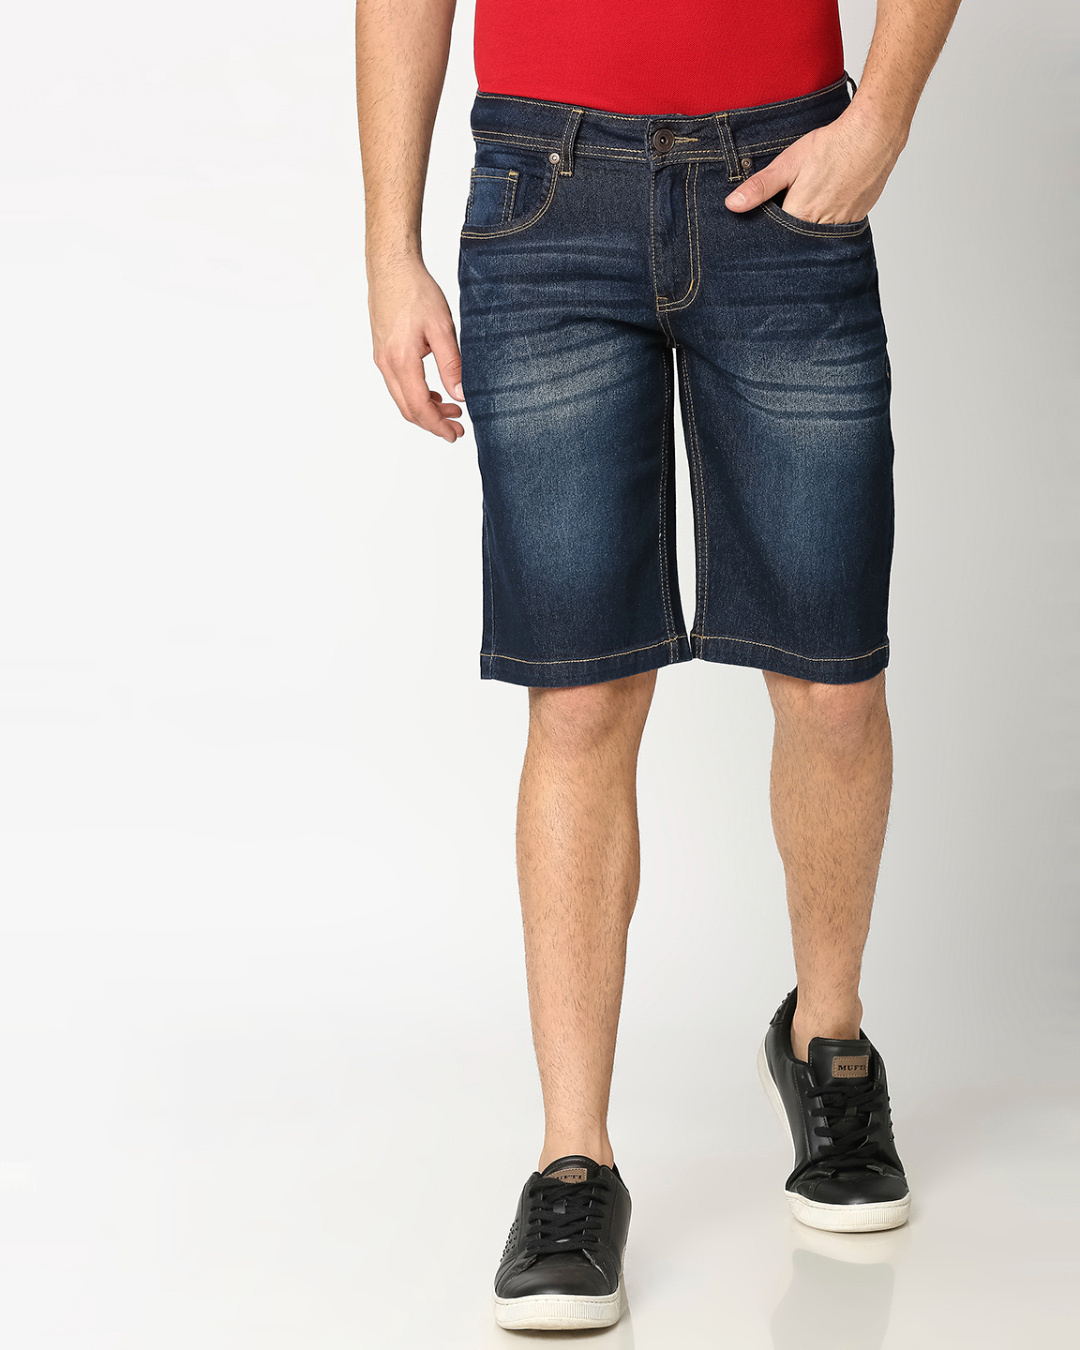 Buy Men's Blue Slim Fit Faded Shorts for Men Blue Online at Bewakoof